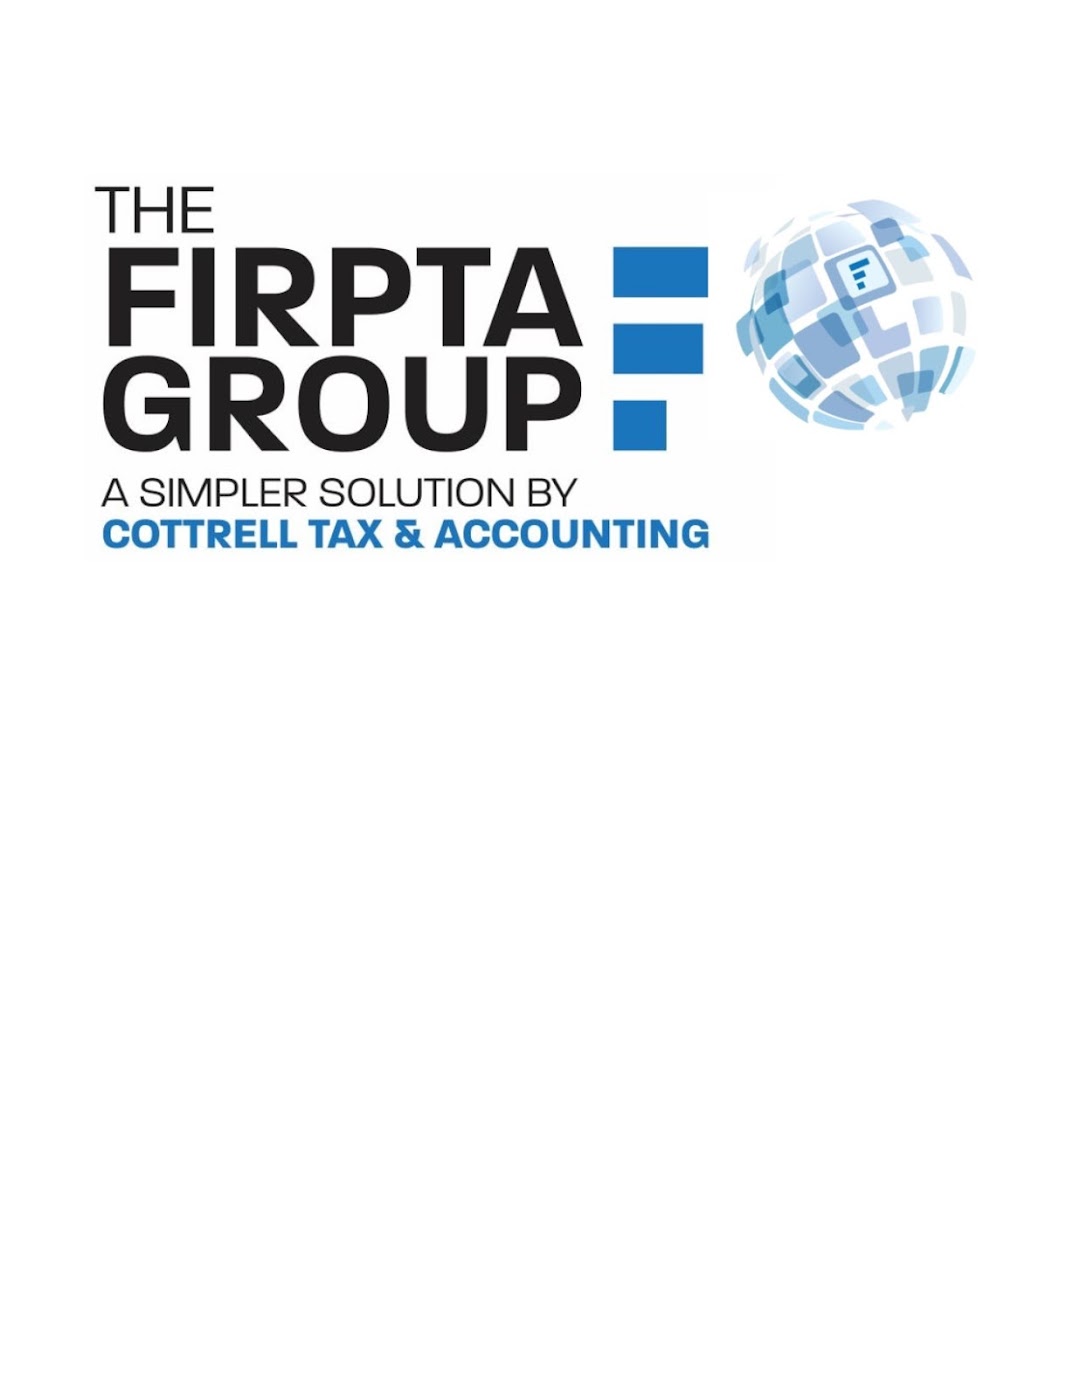 The FIRPTA Group, LLC